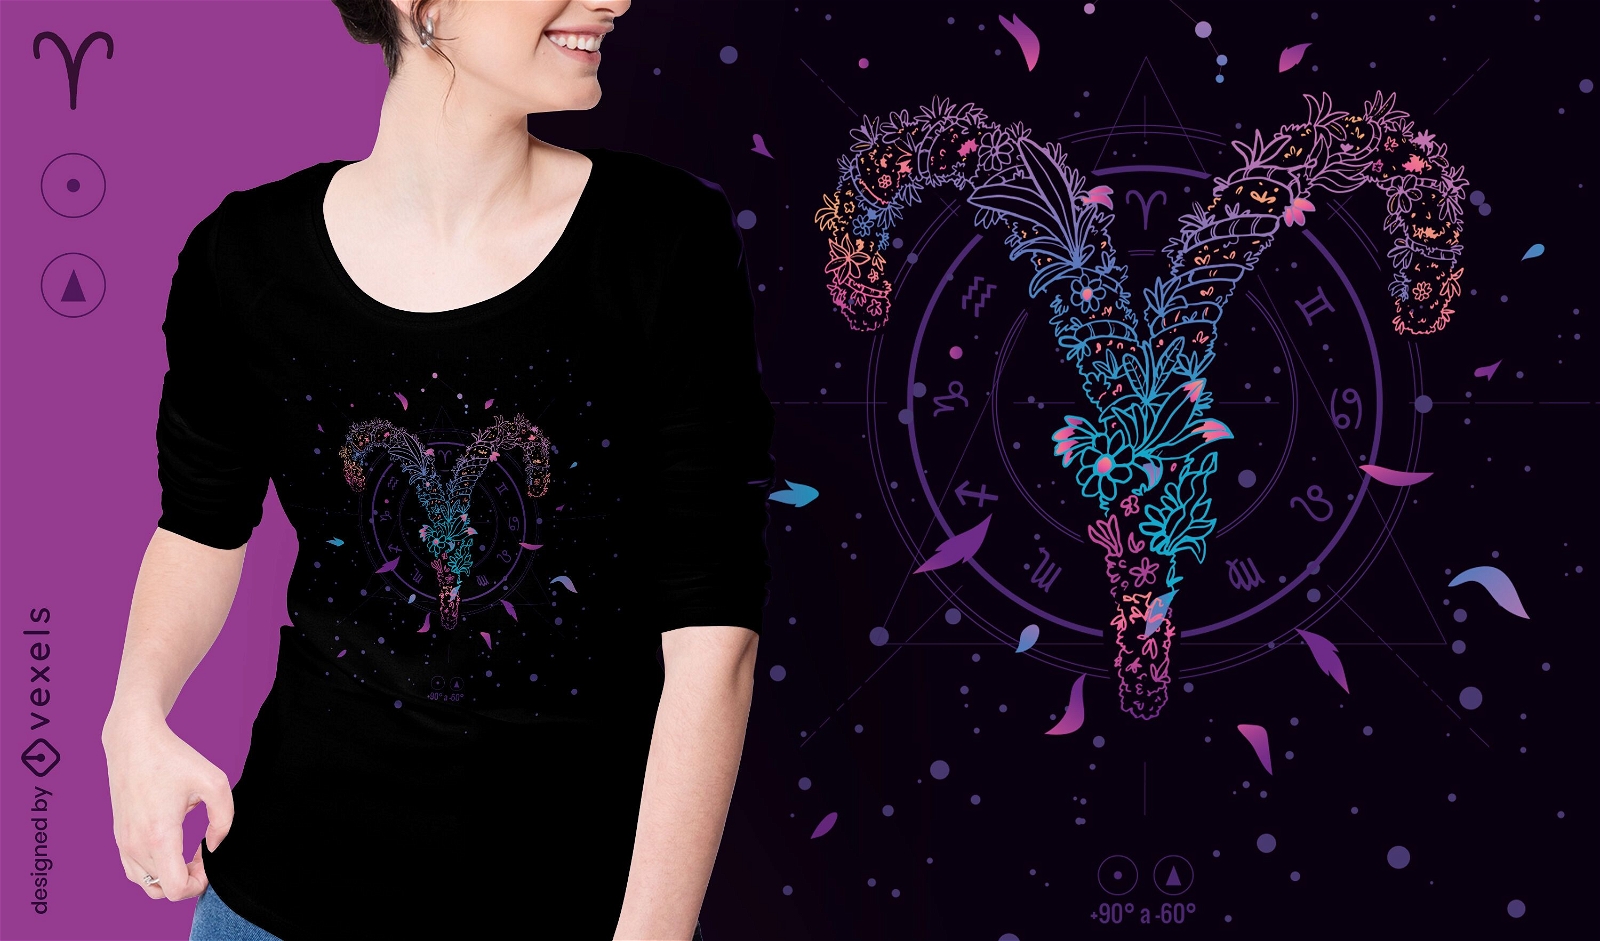 Aries floral zodiac sign t-shirt design